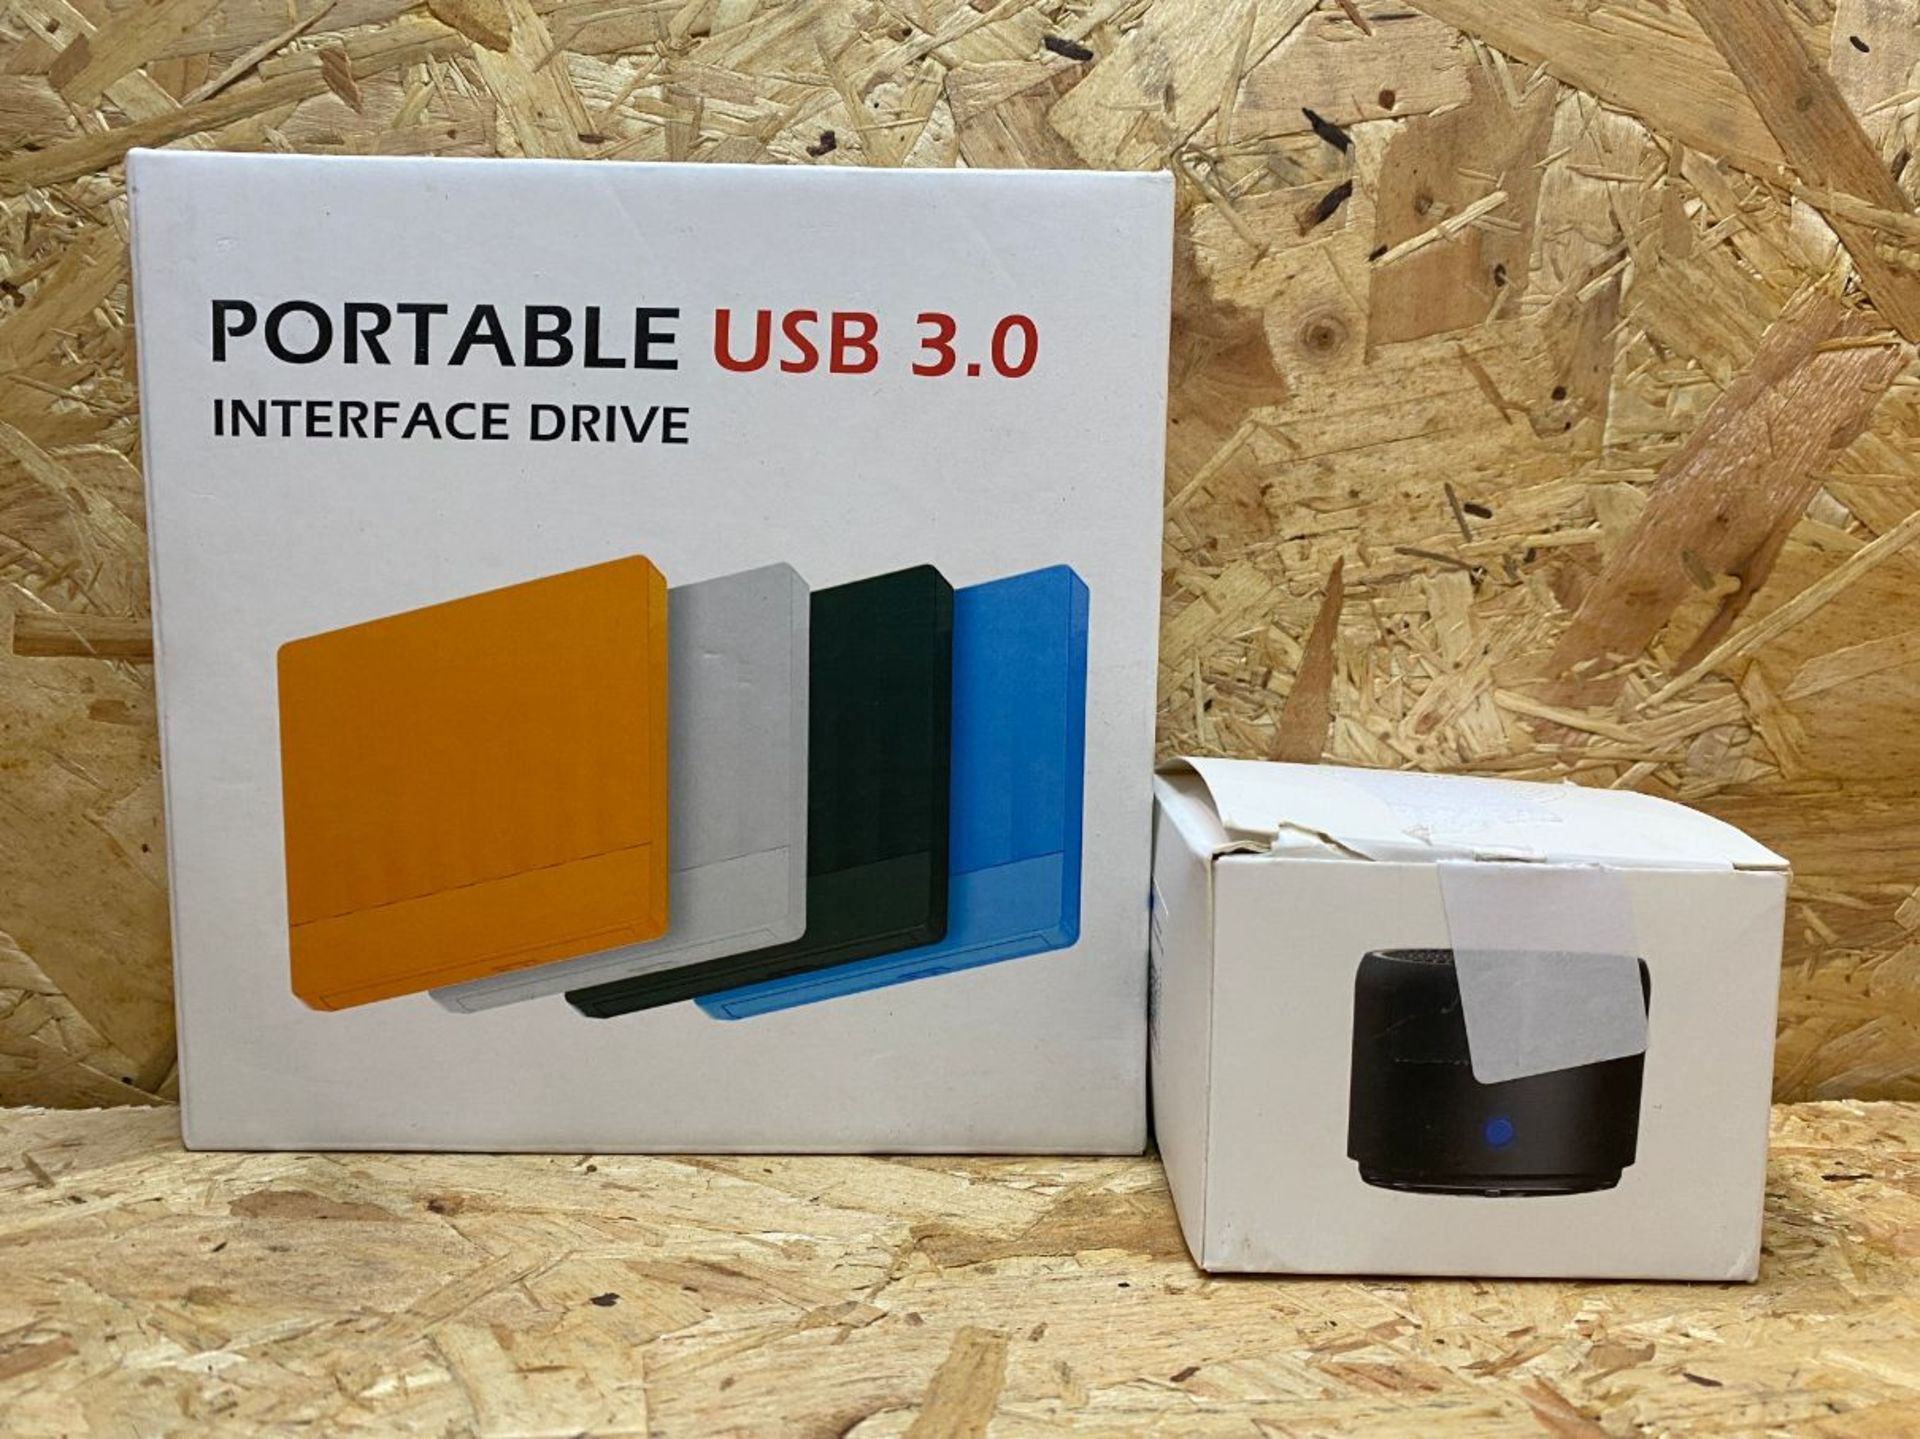 1 X PORTABLE USB 3.0 INTERFACE DRIVE / PLUS 1 X EWA BLUETOOTH SPEAKER